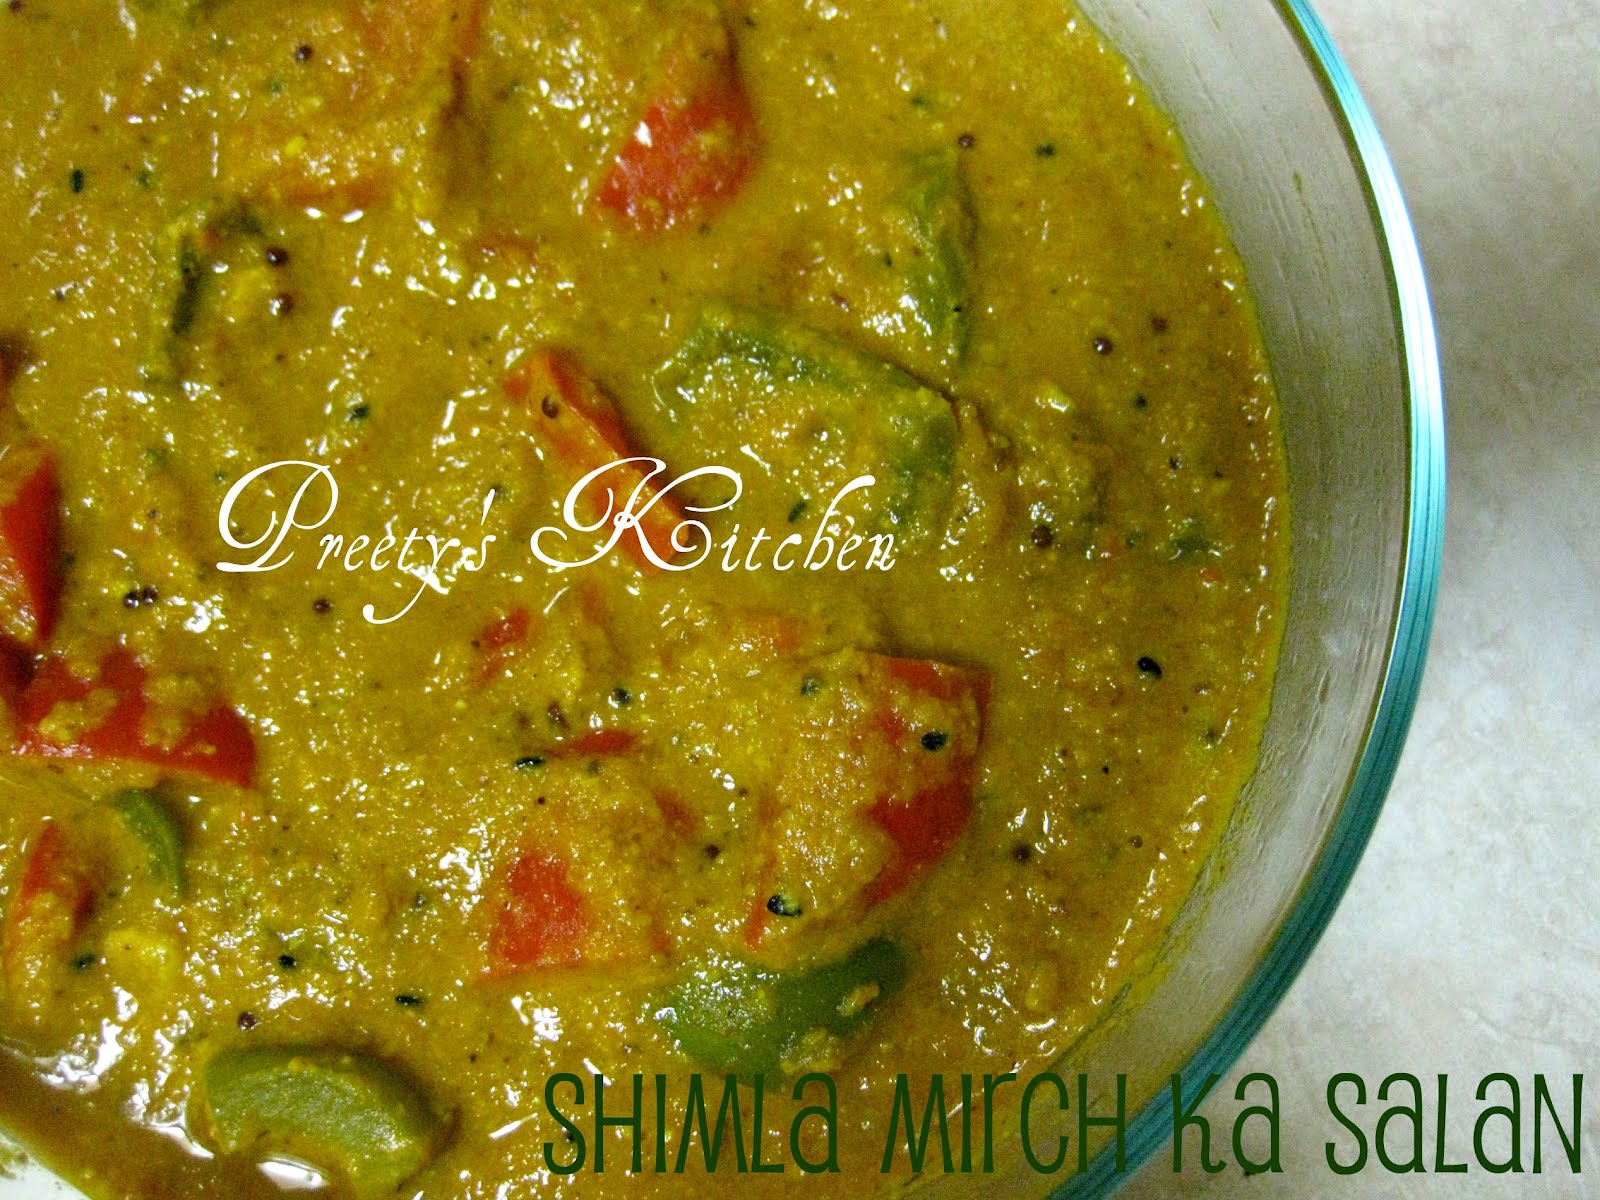 Shimla Mirch Ka Besan Recipe